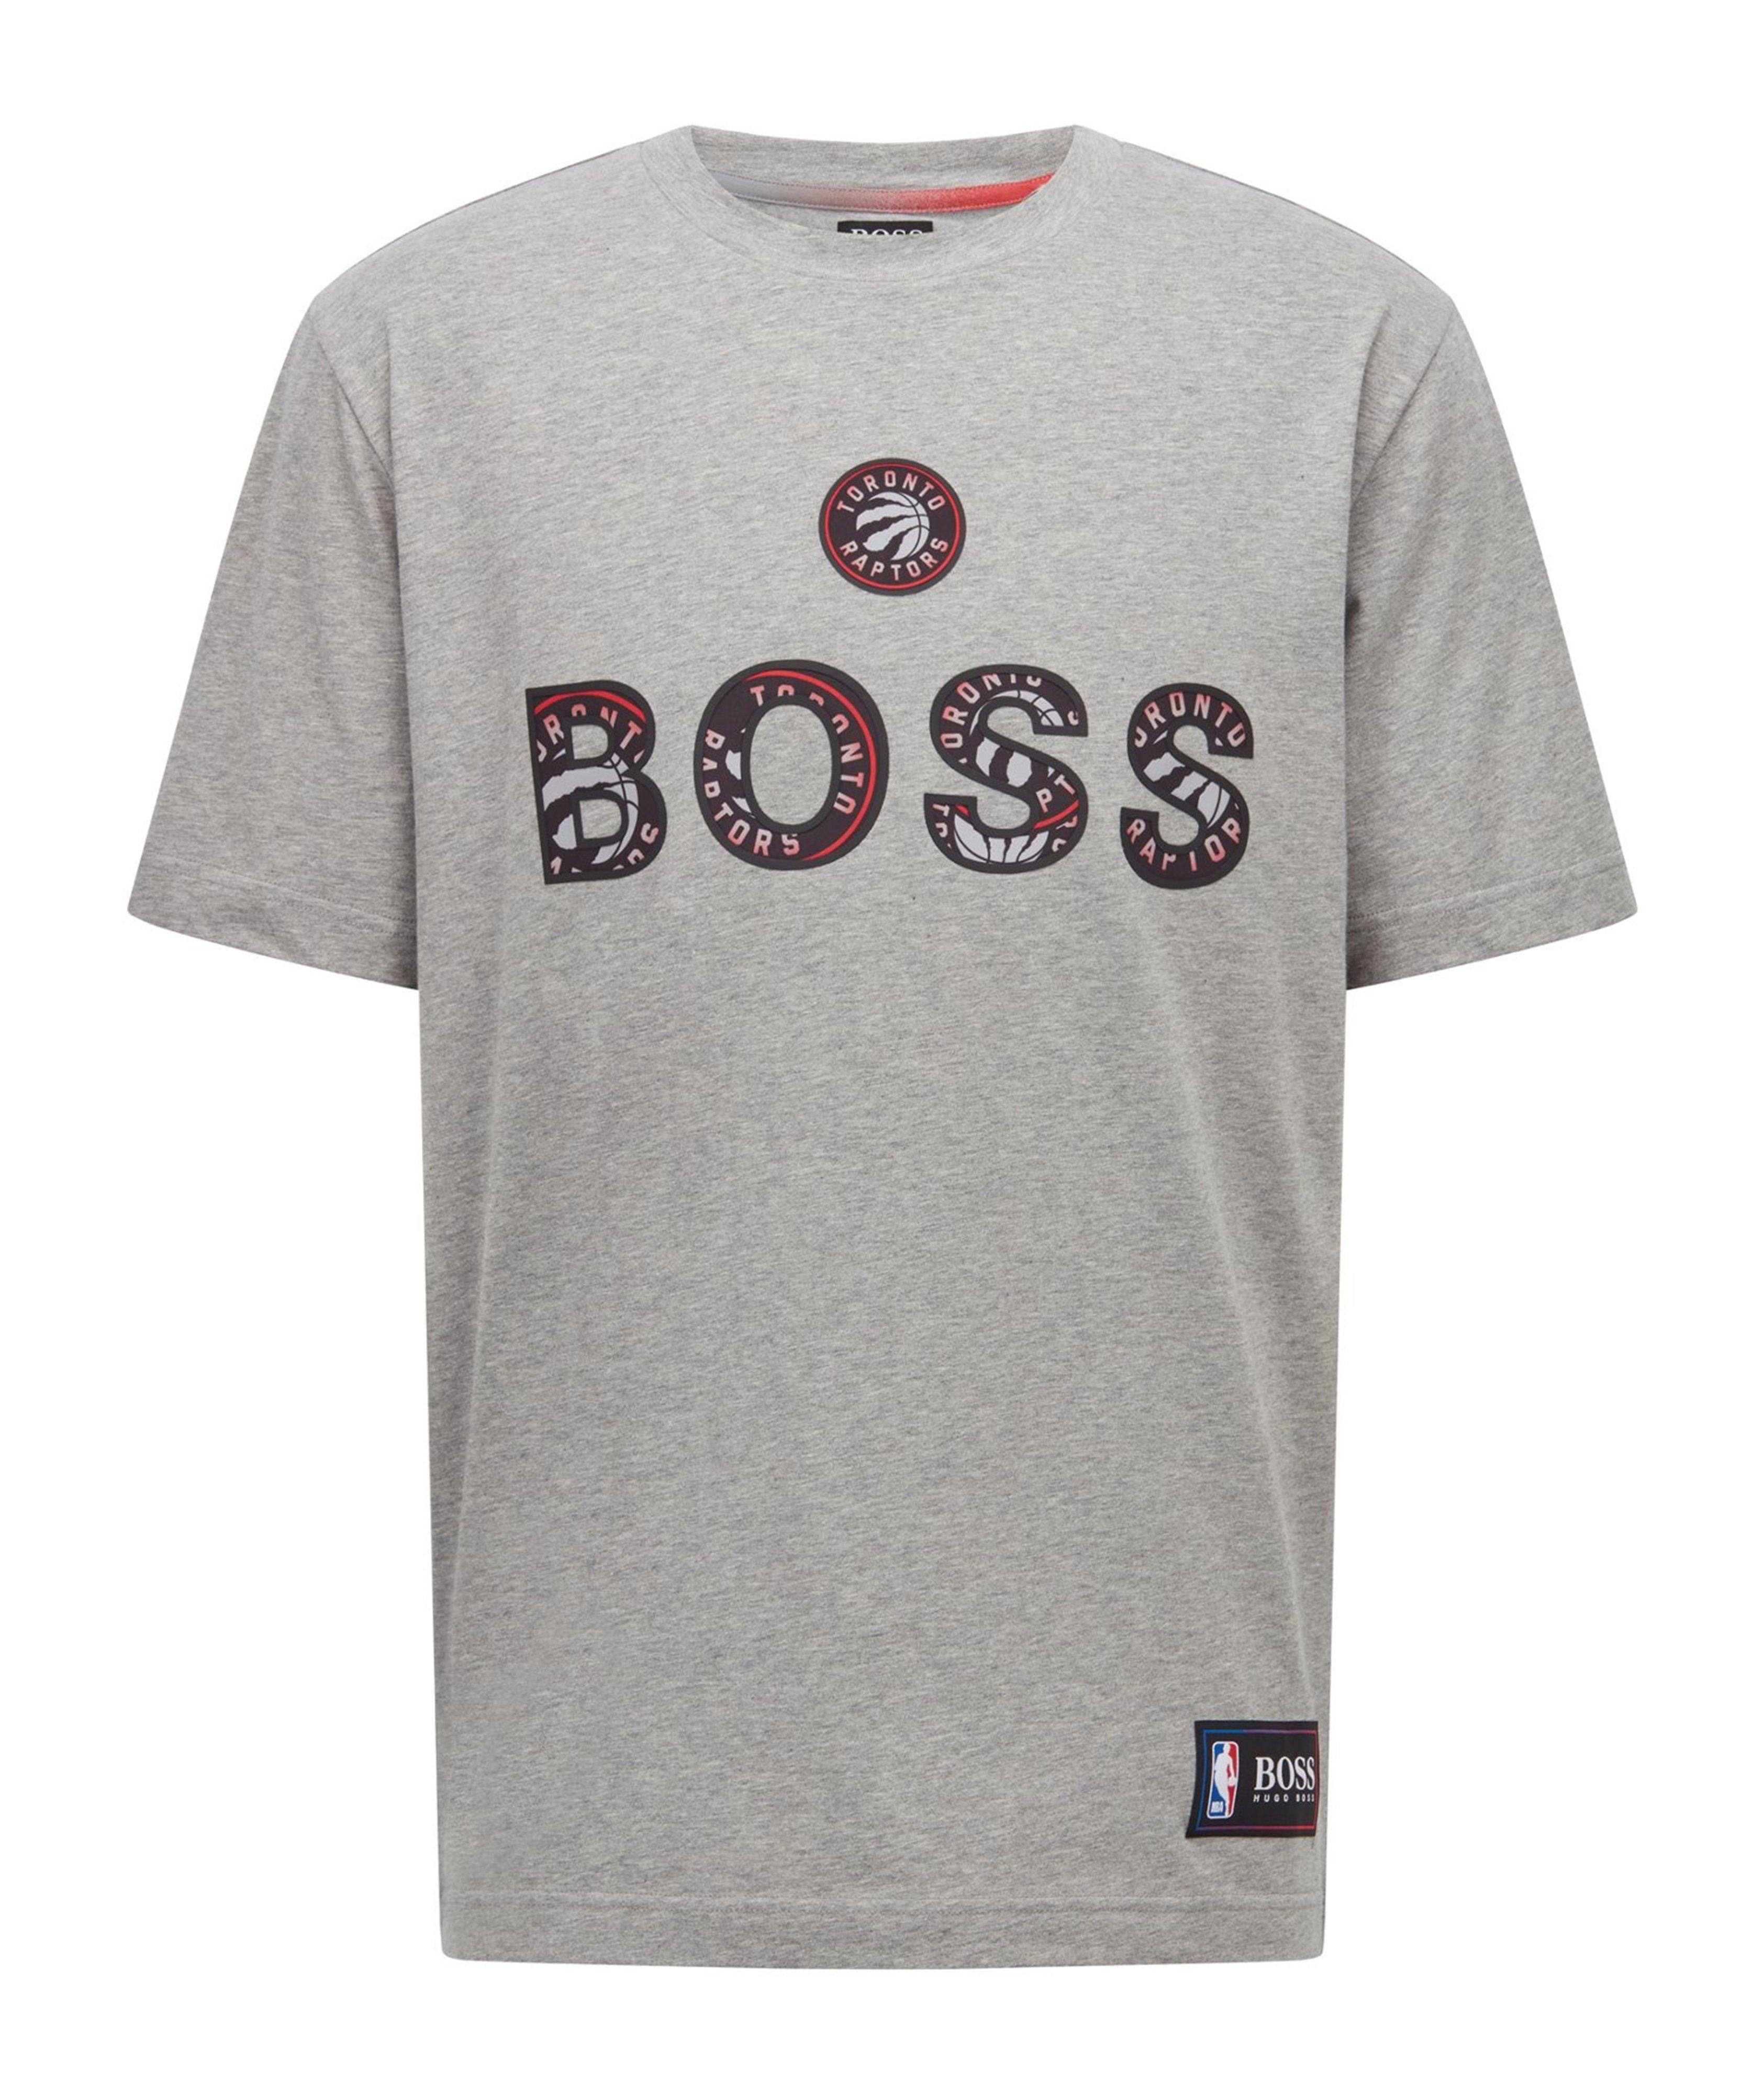 BOSS X NBA Stretch-Cotton T-Shirt image 0